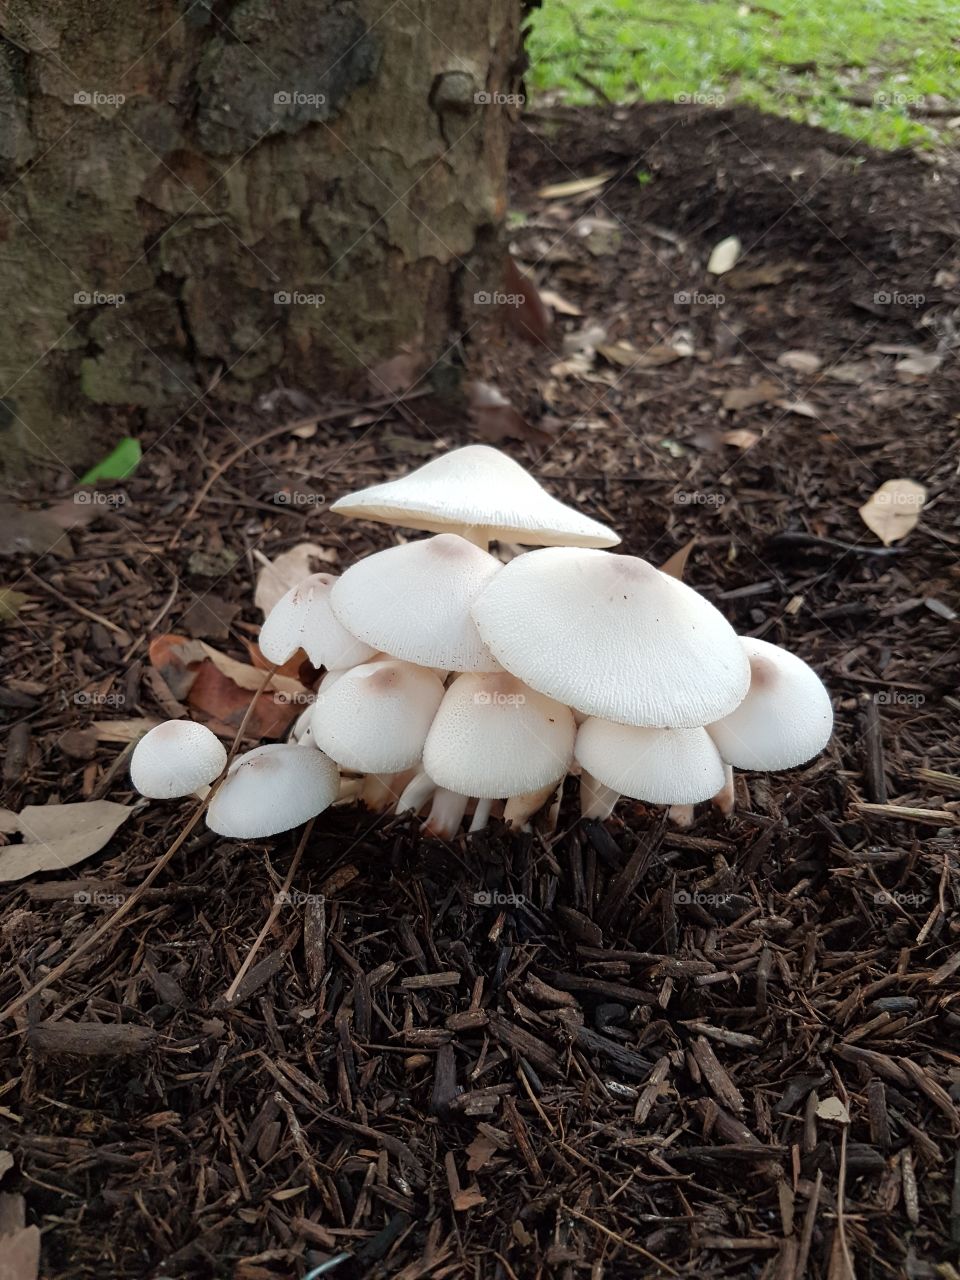 Mushroom togetherness